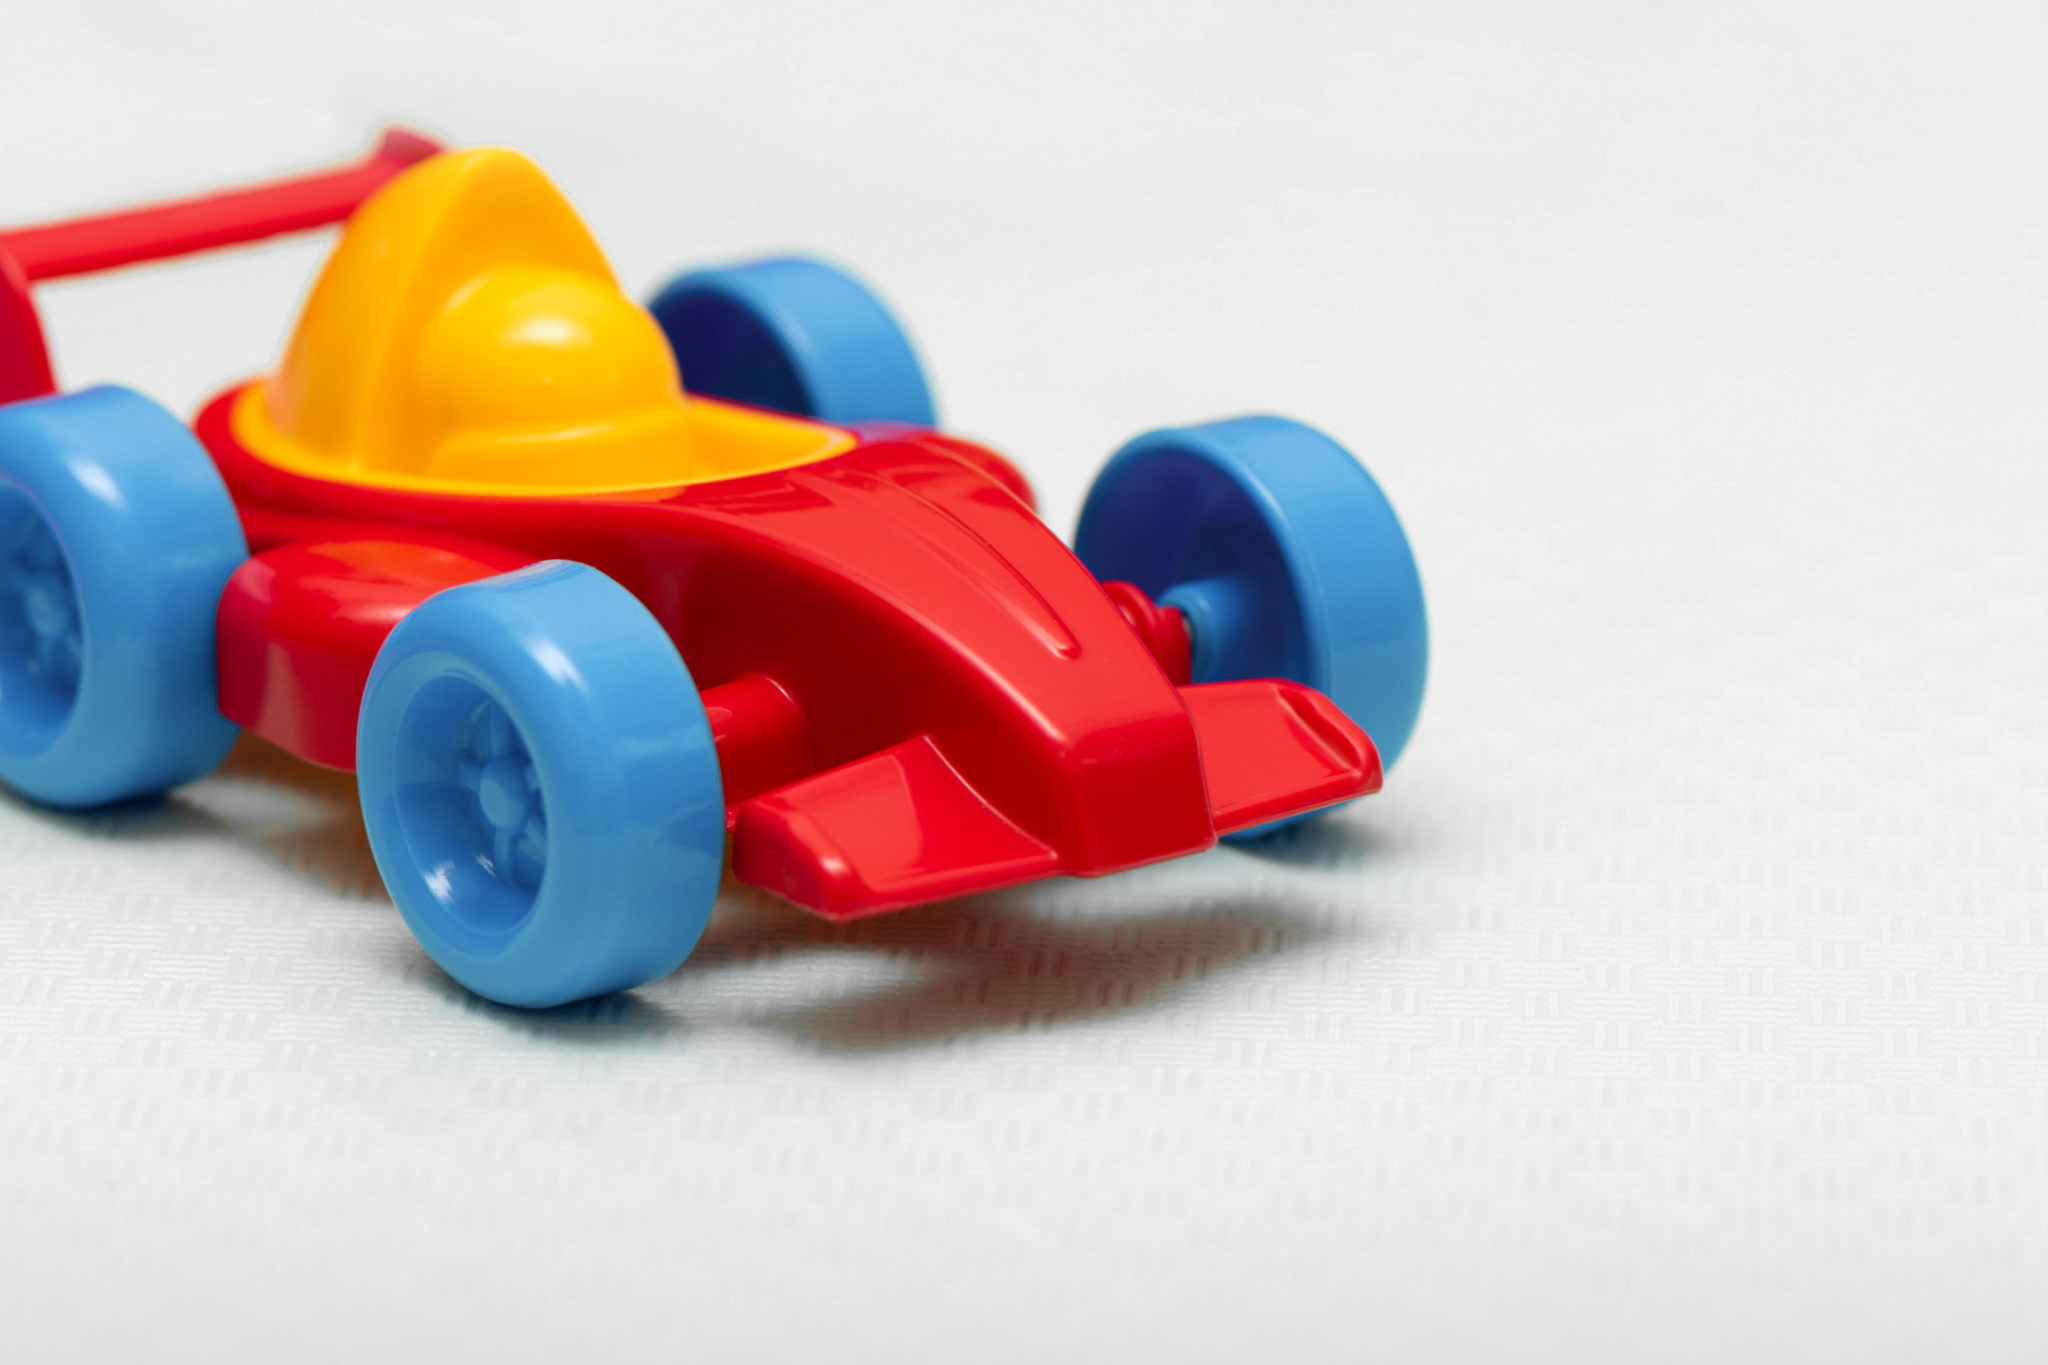 Children's toy plastic red machine, close up.